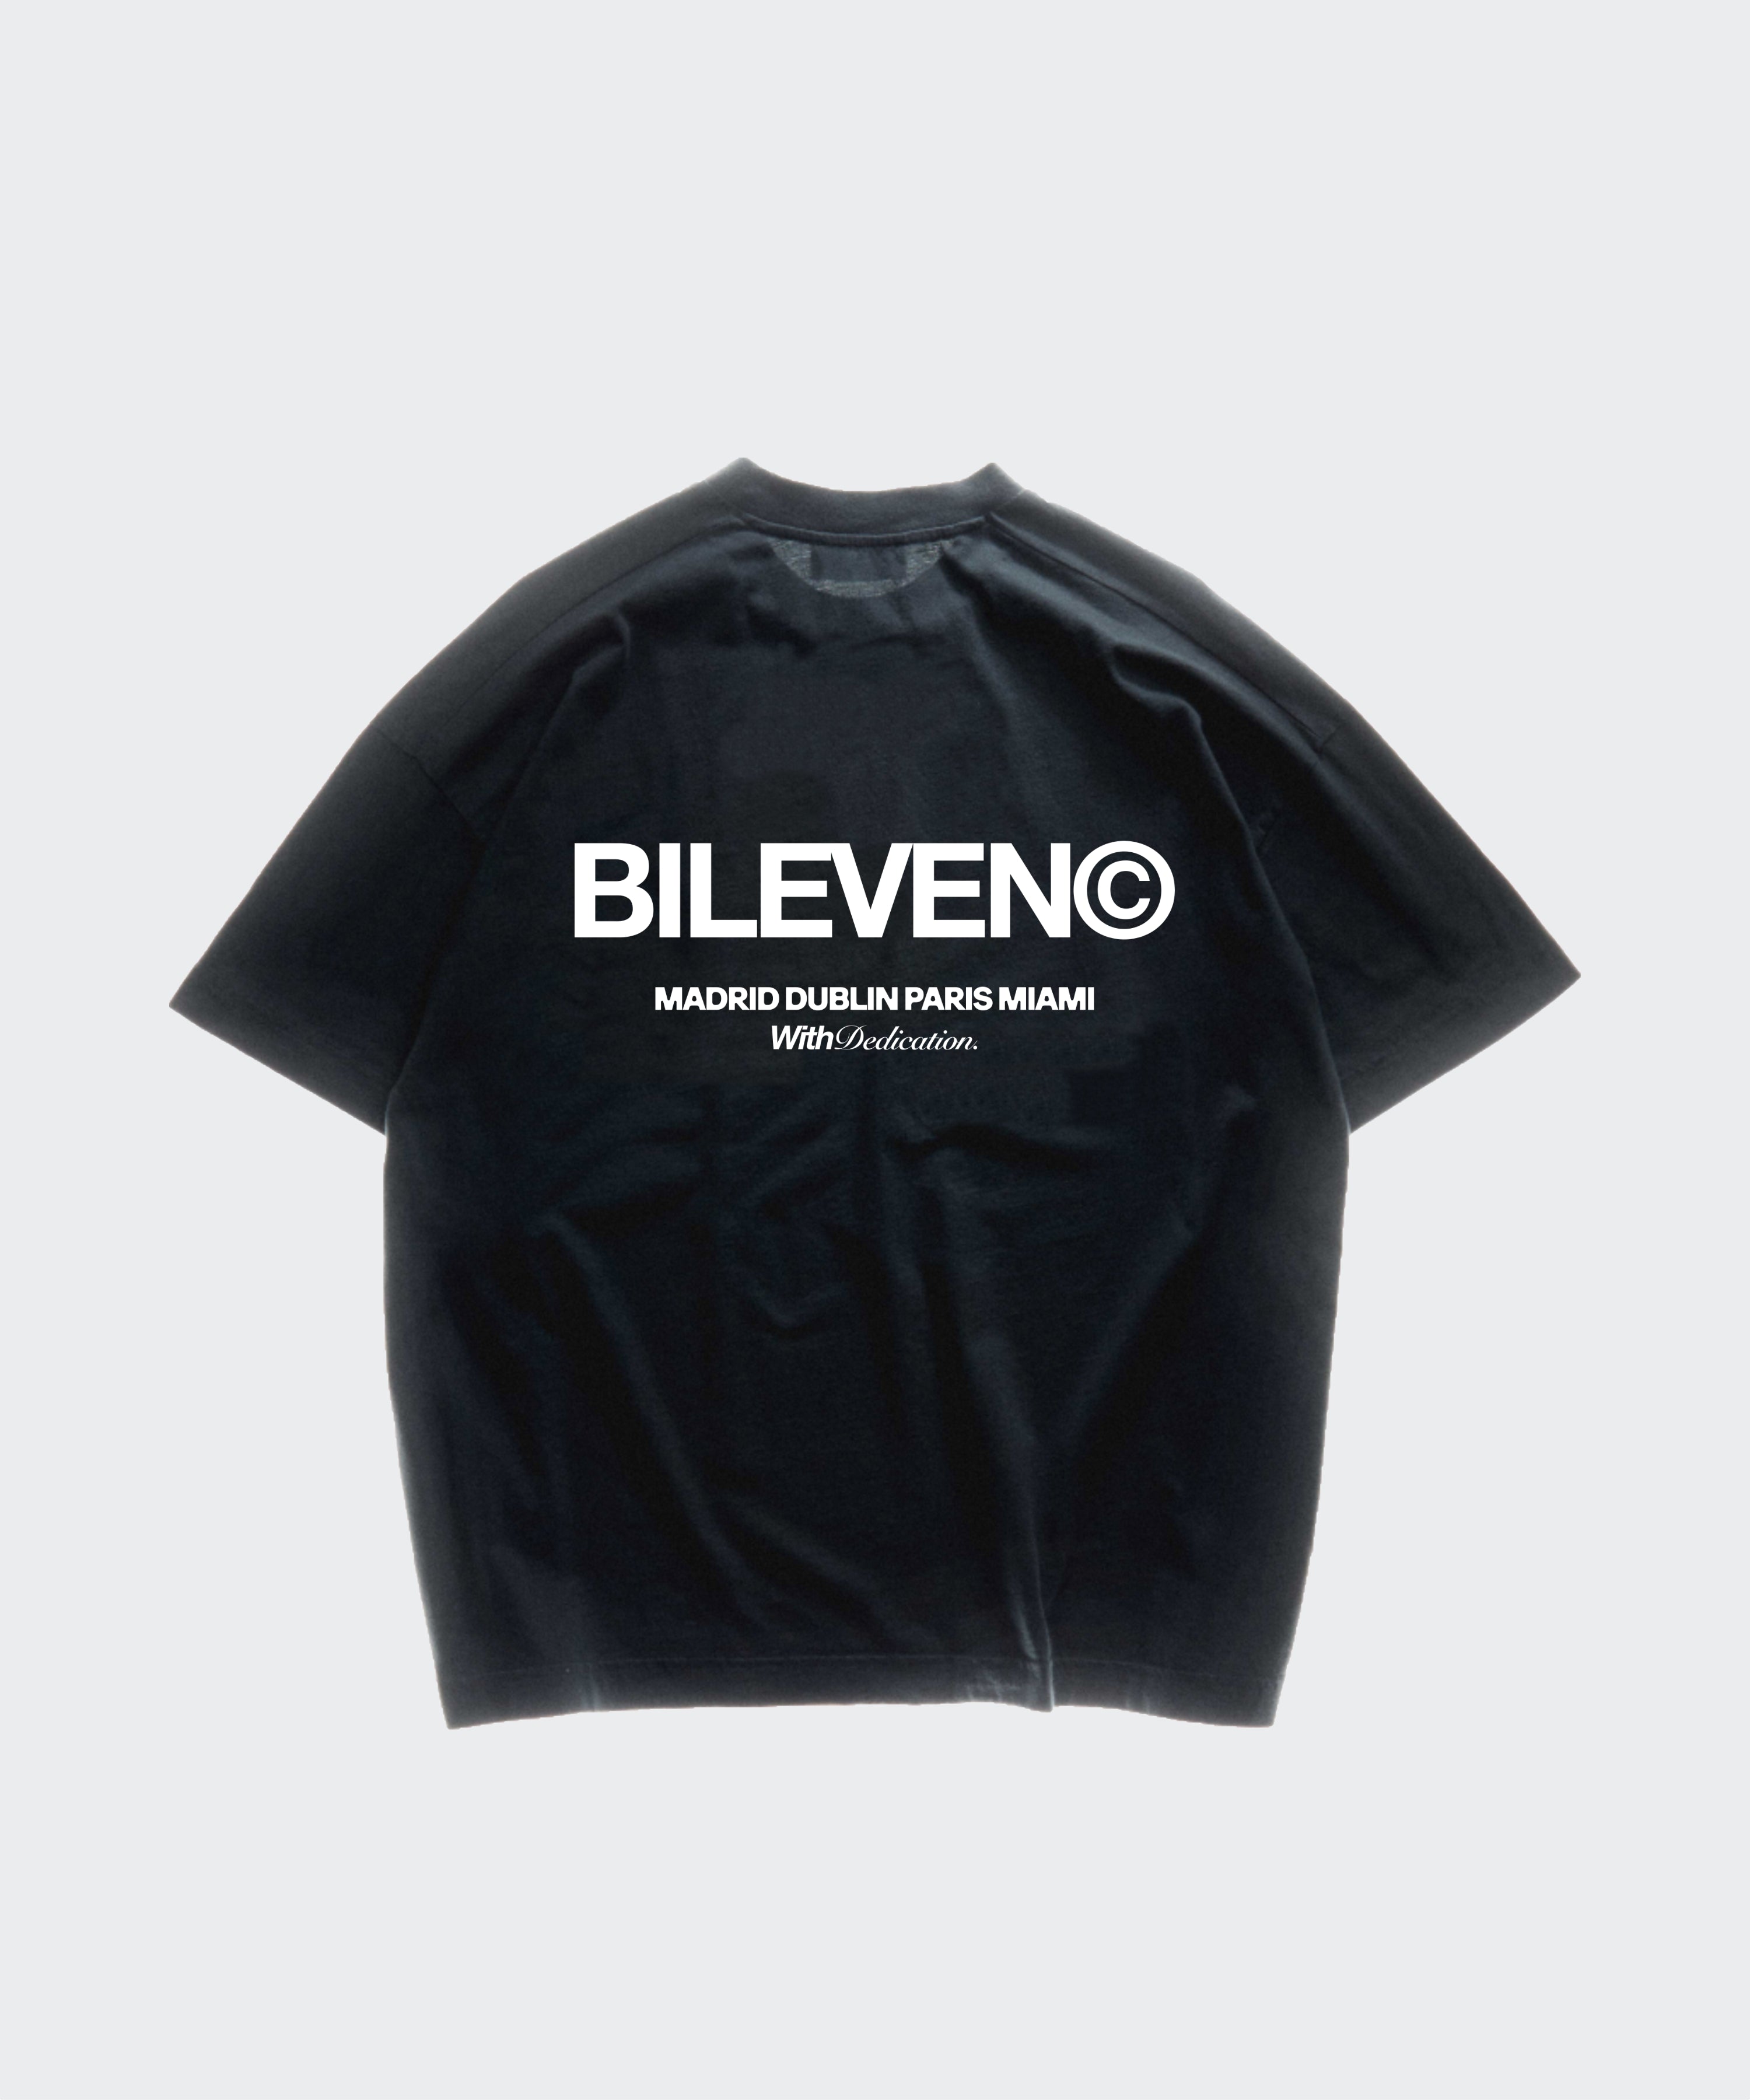 Camiseta BILEVEN©